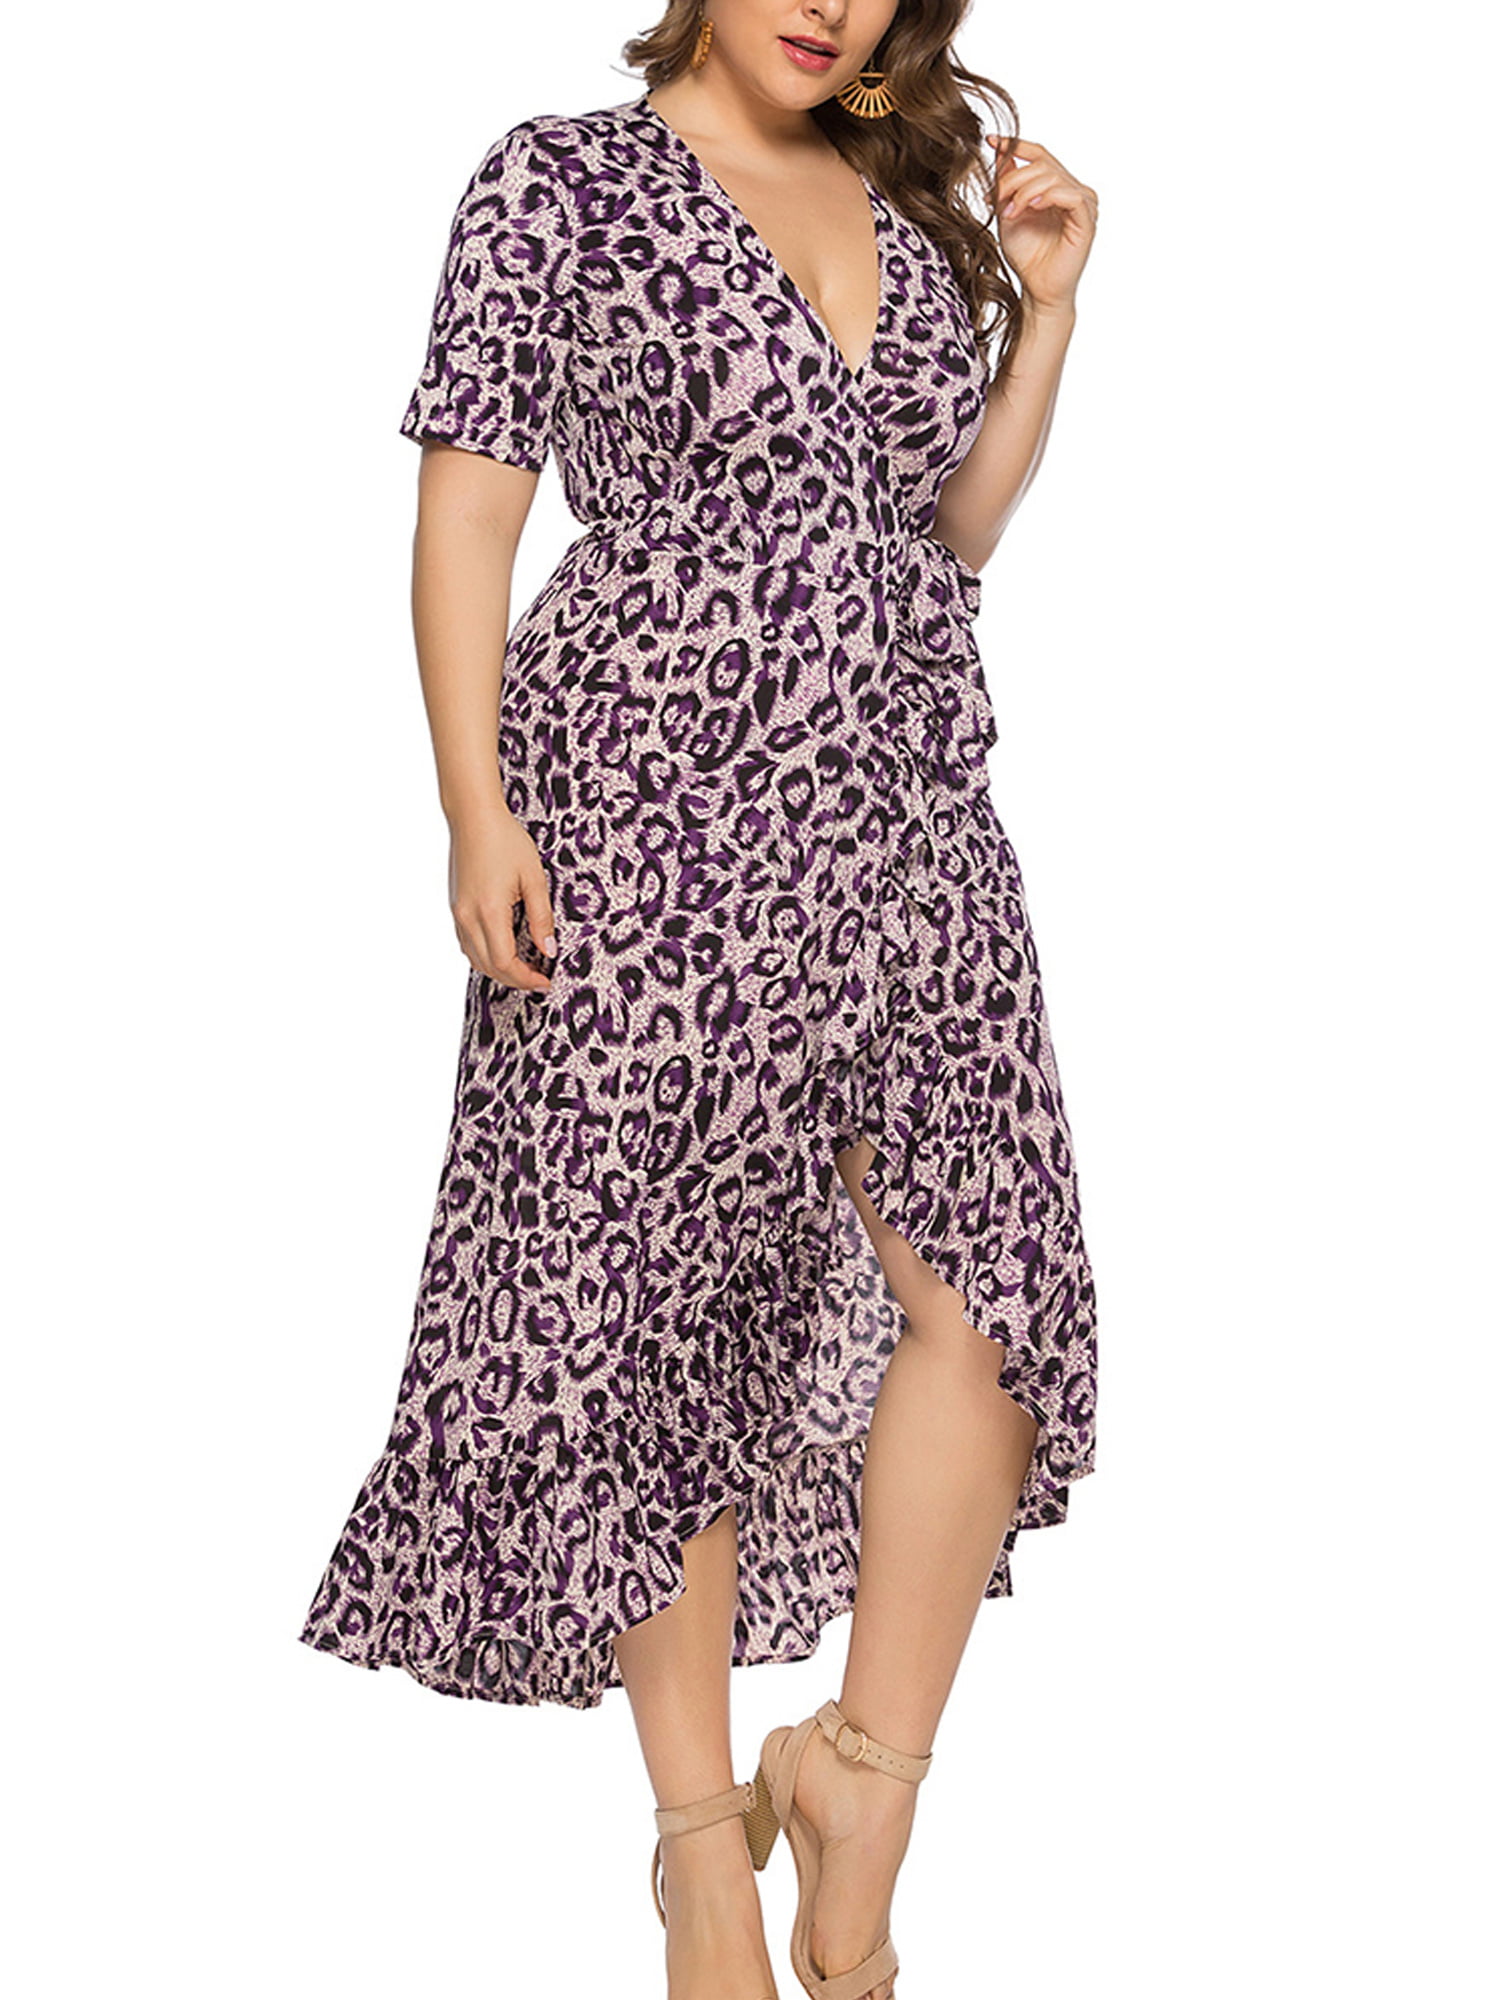 RELA RELA Women Summer Mini Dress Leopard Print Frill Wrap Dress Long Sleeves Floral Ruffles Party Dress